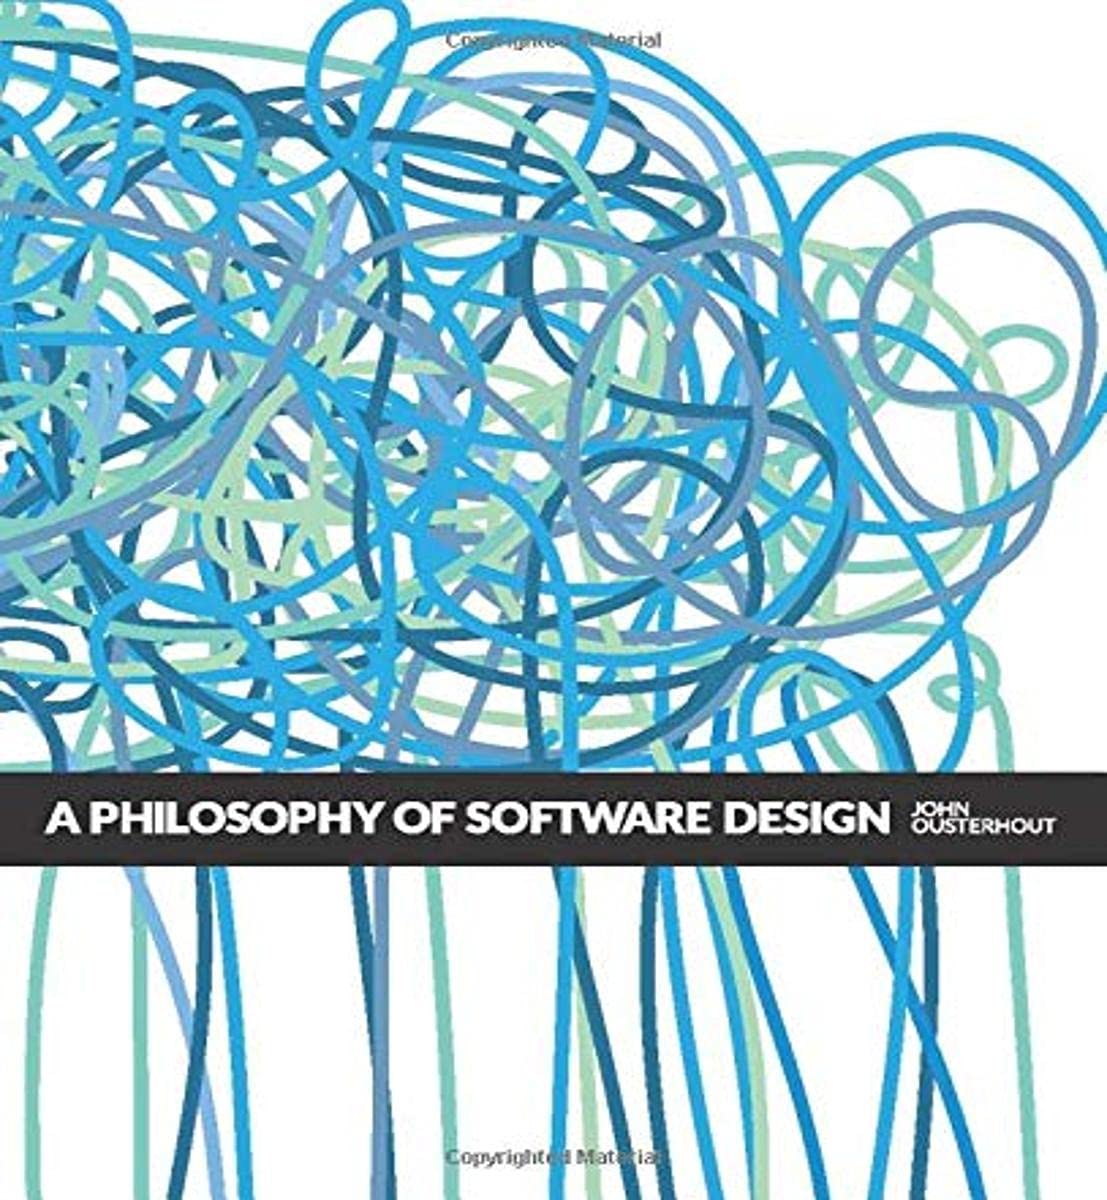 Image A philosophy of software design